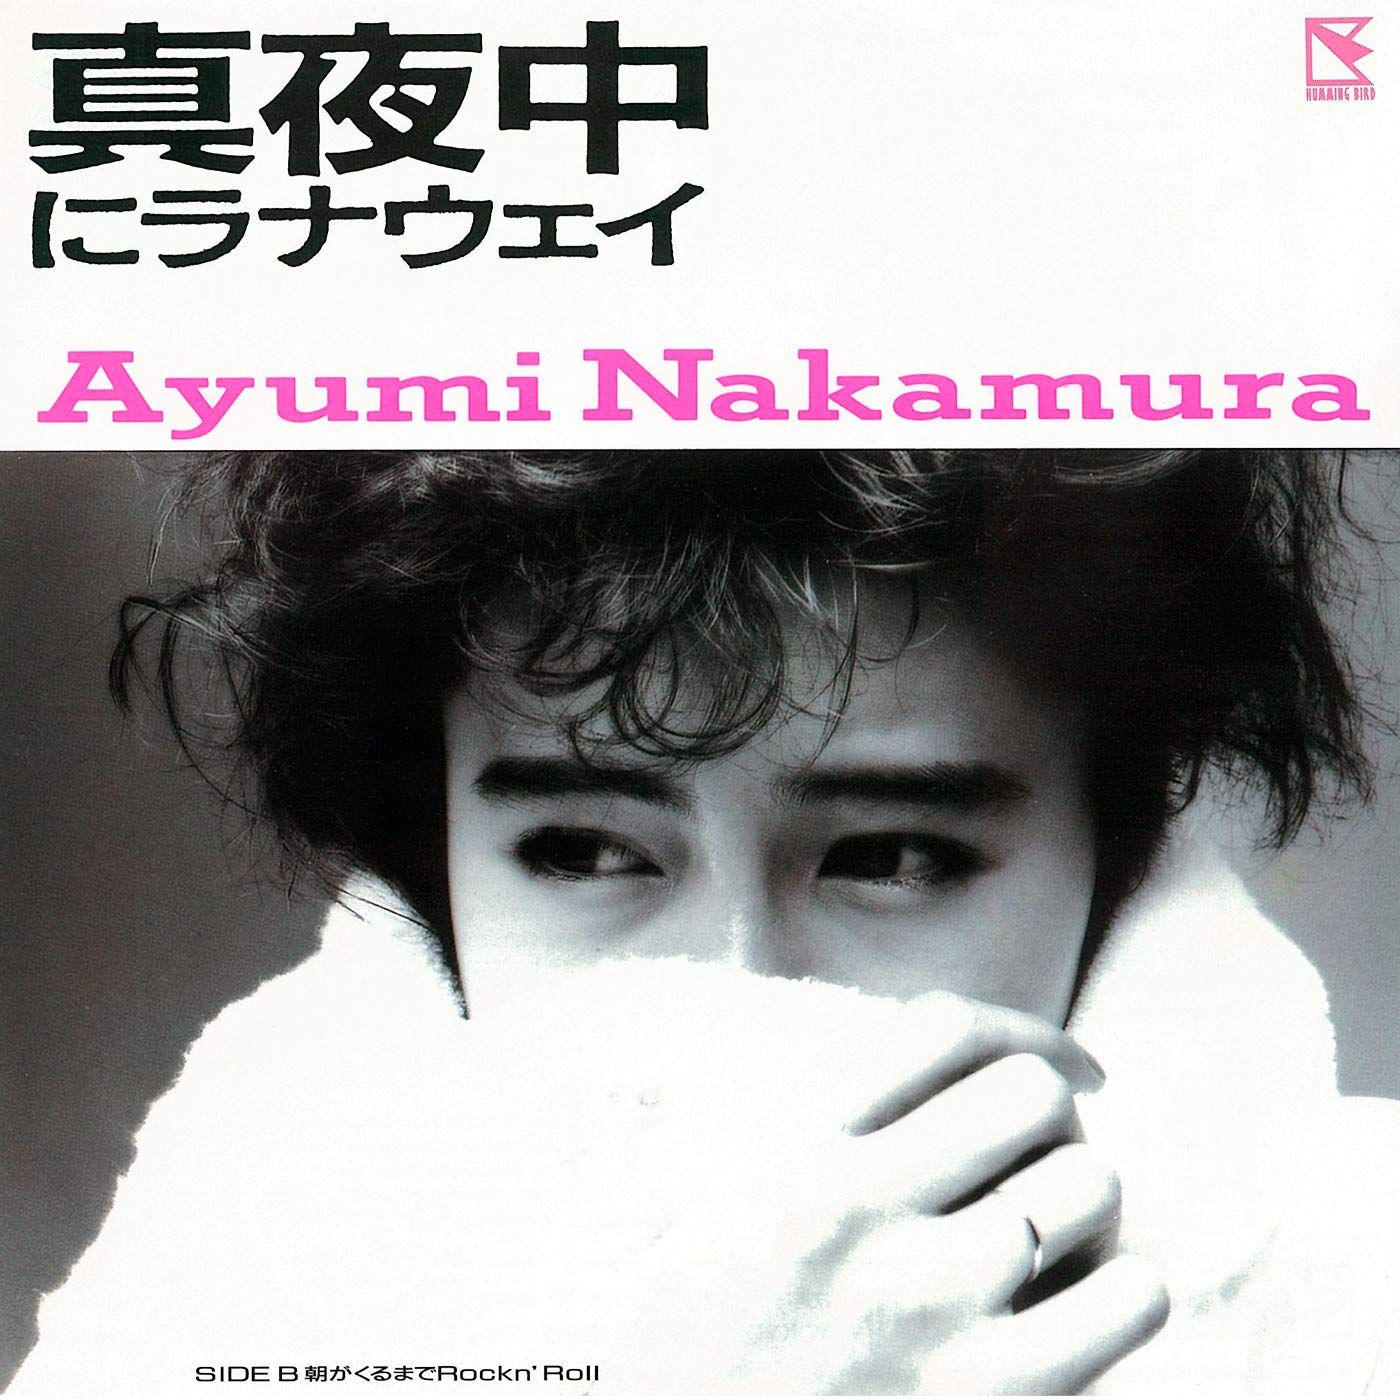 Ayumi Nakamura (中村あゆみ) - 真夜中にラナウェイ/ 朝が来るまでRock’n Roll (2019 Remastered) (1986/2019) [FLAC 24bit/48kHz] Download